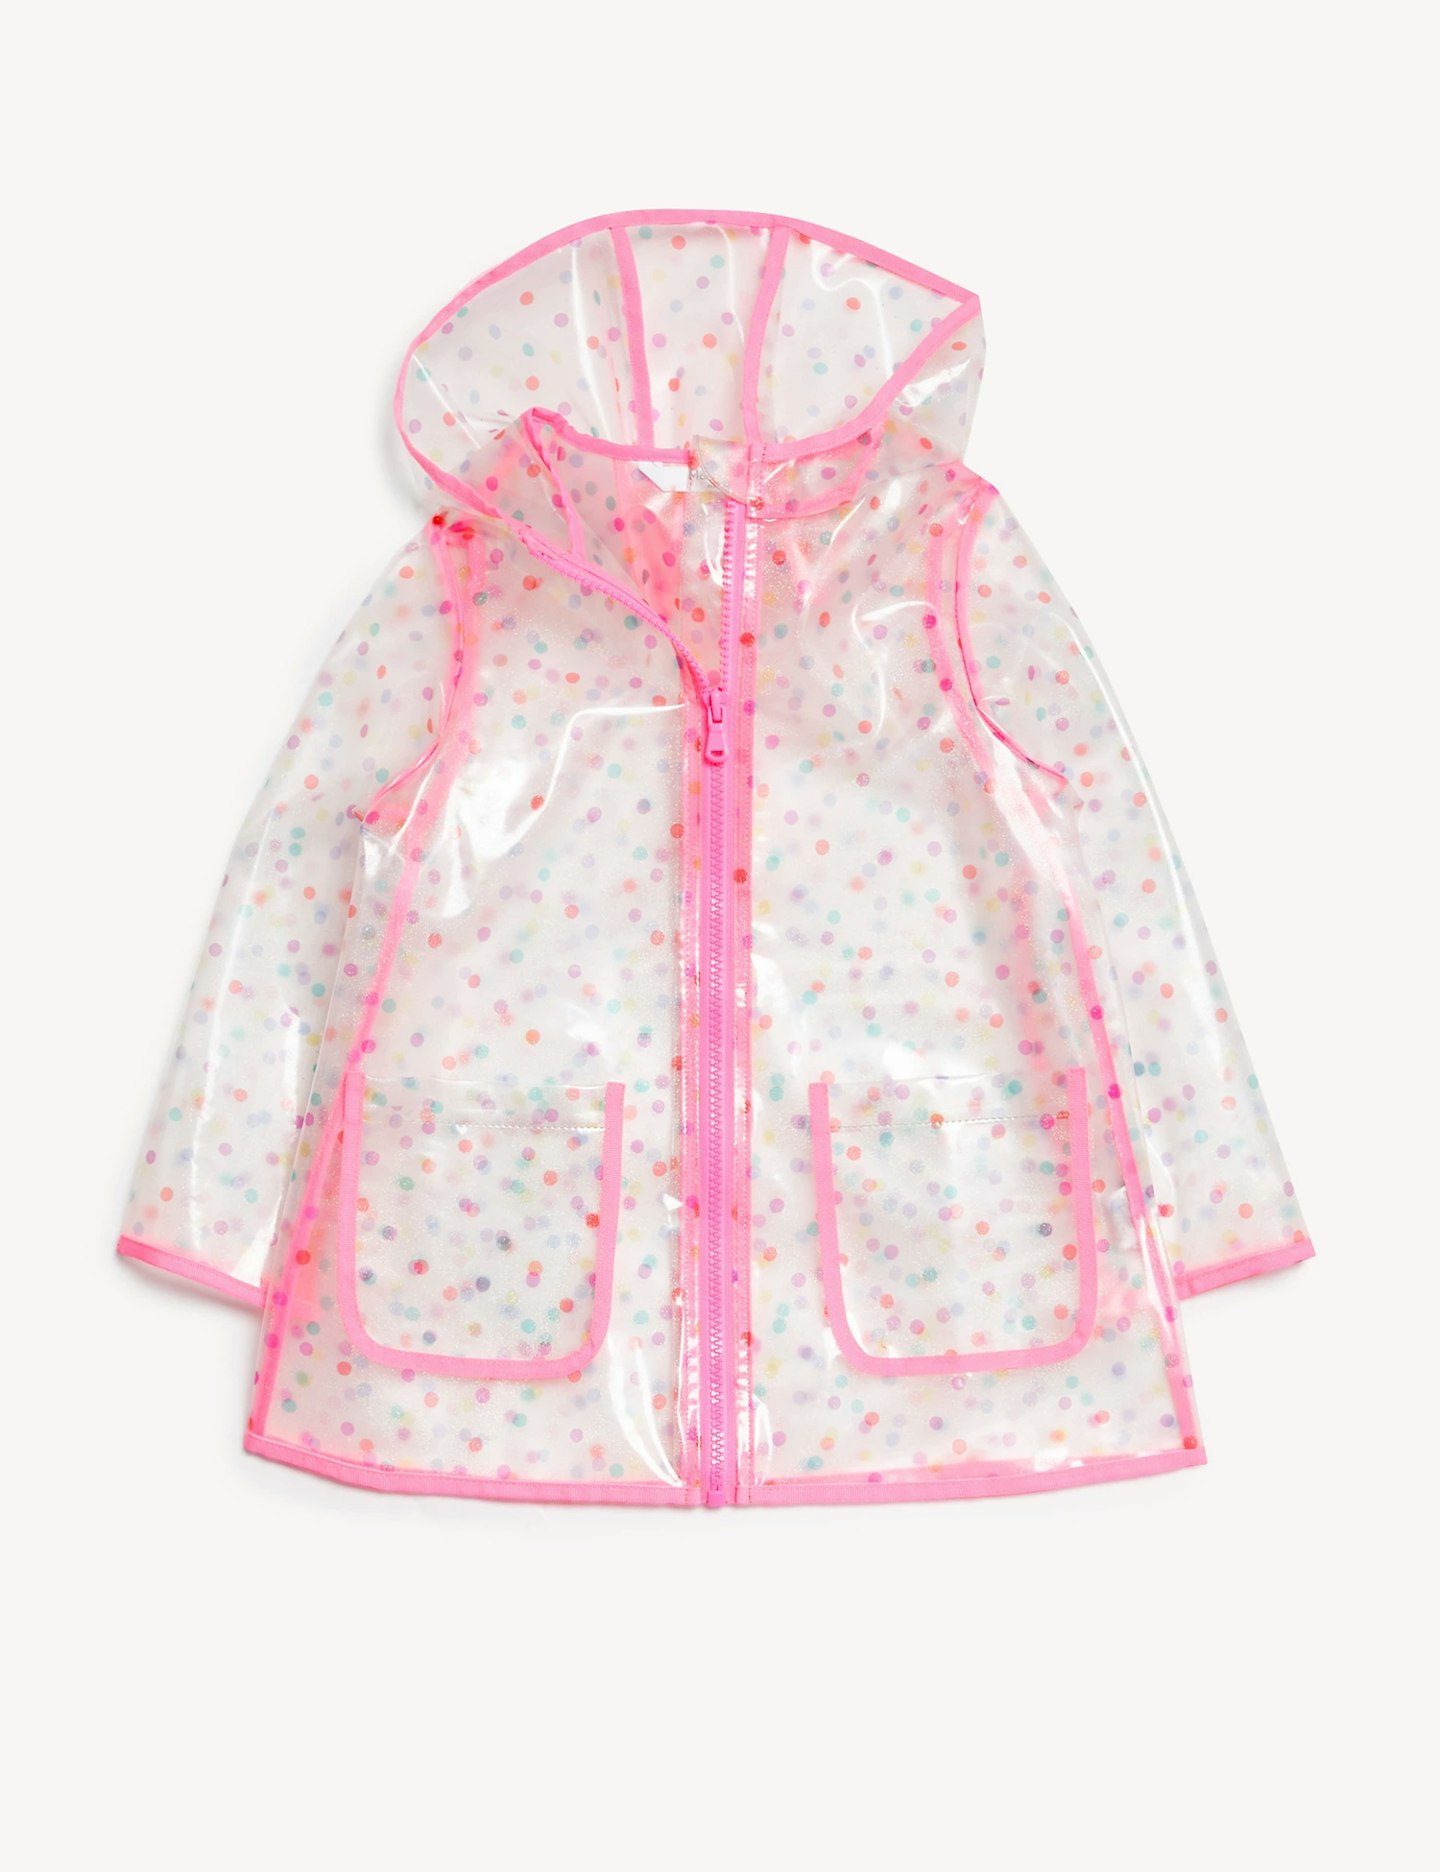 m&S best kids' raincoats 